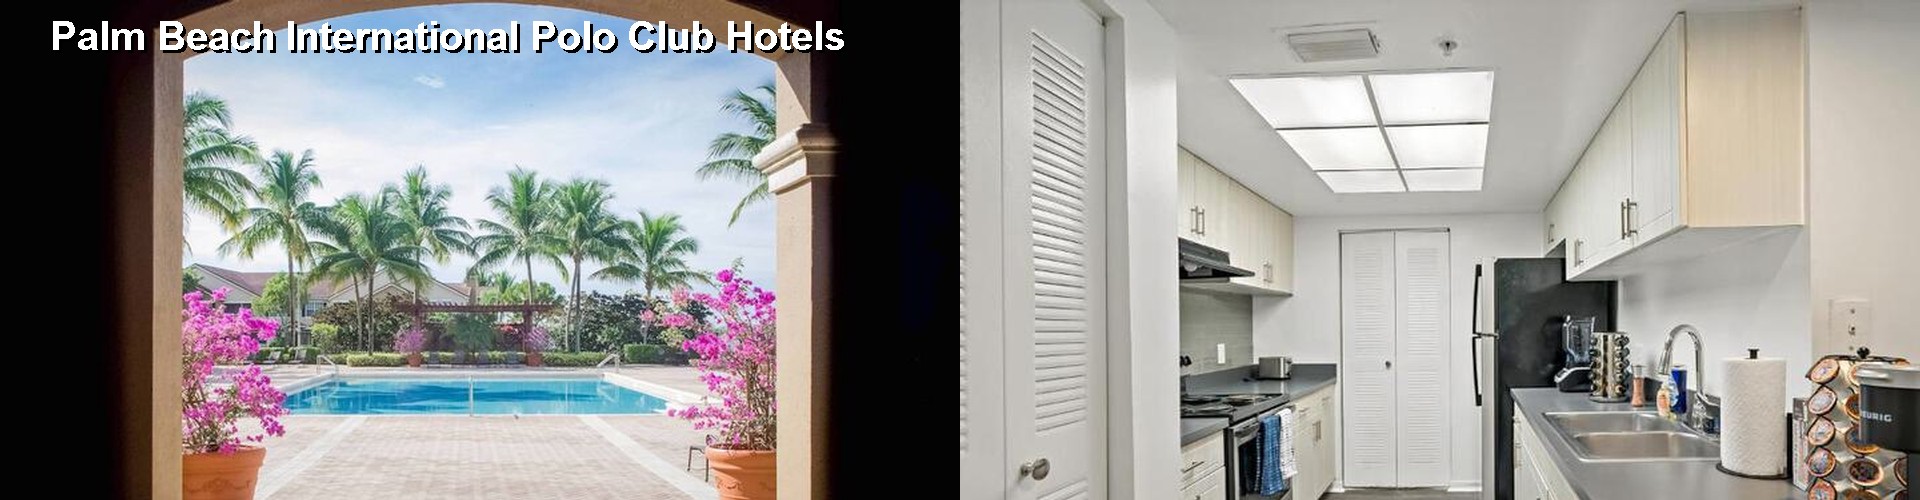 5 Best Hotels near Palm Beach International Polo Club